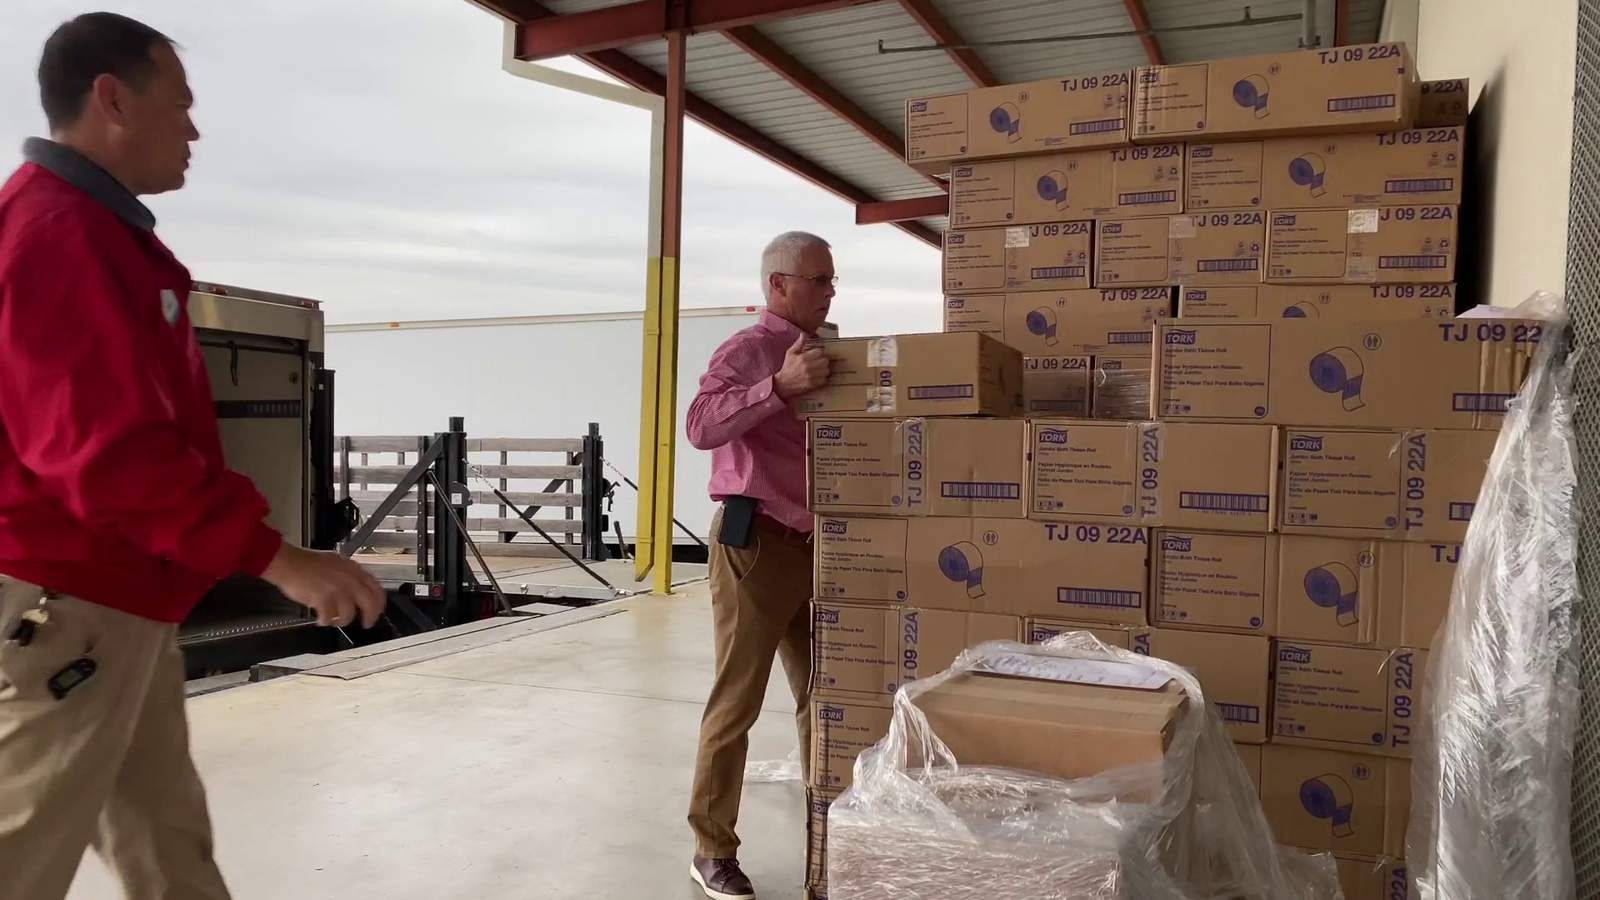 SeaWorld donates toilet paper to medical trainees at Ft. Sam Houston